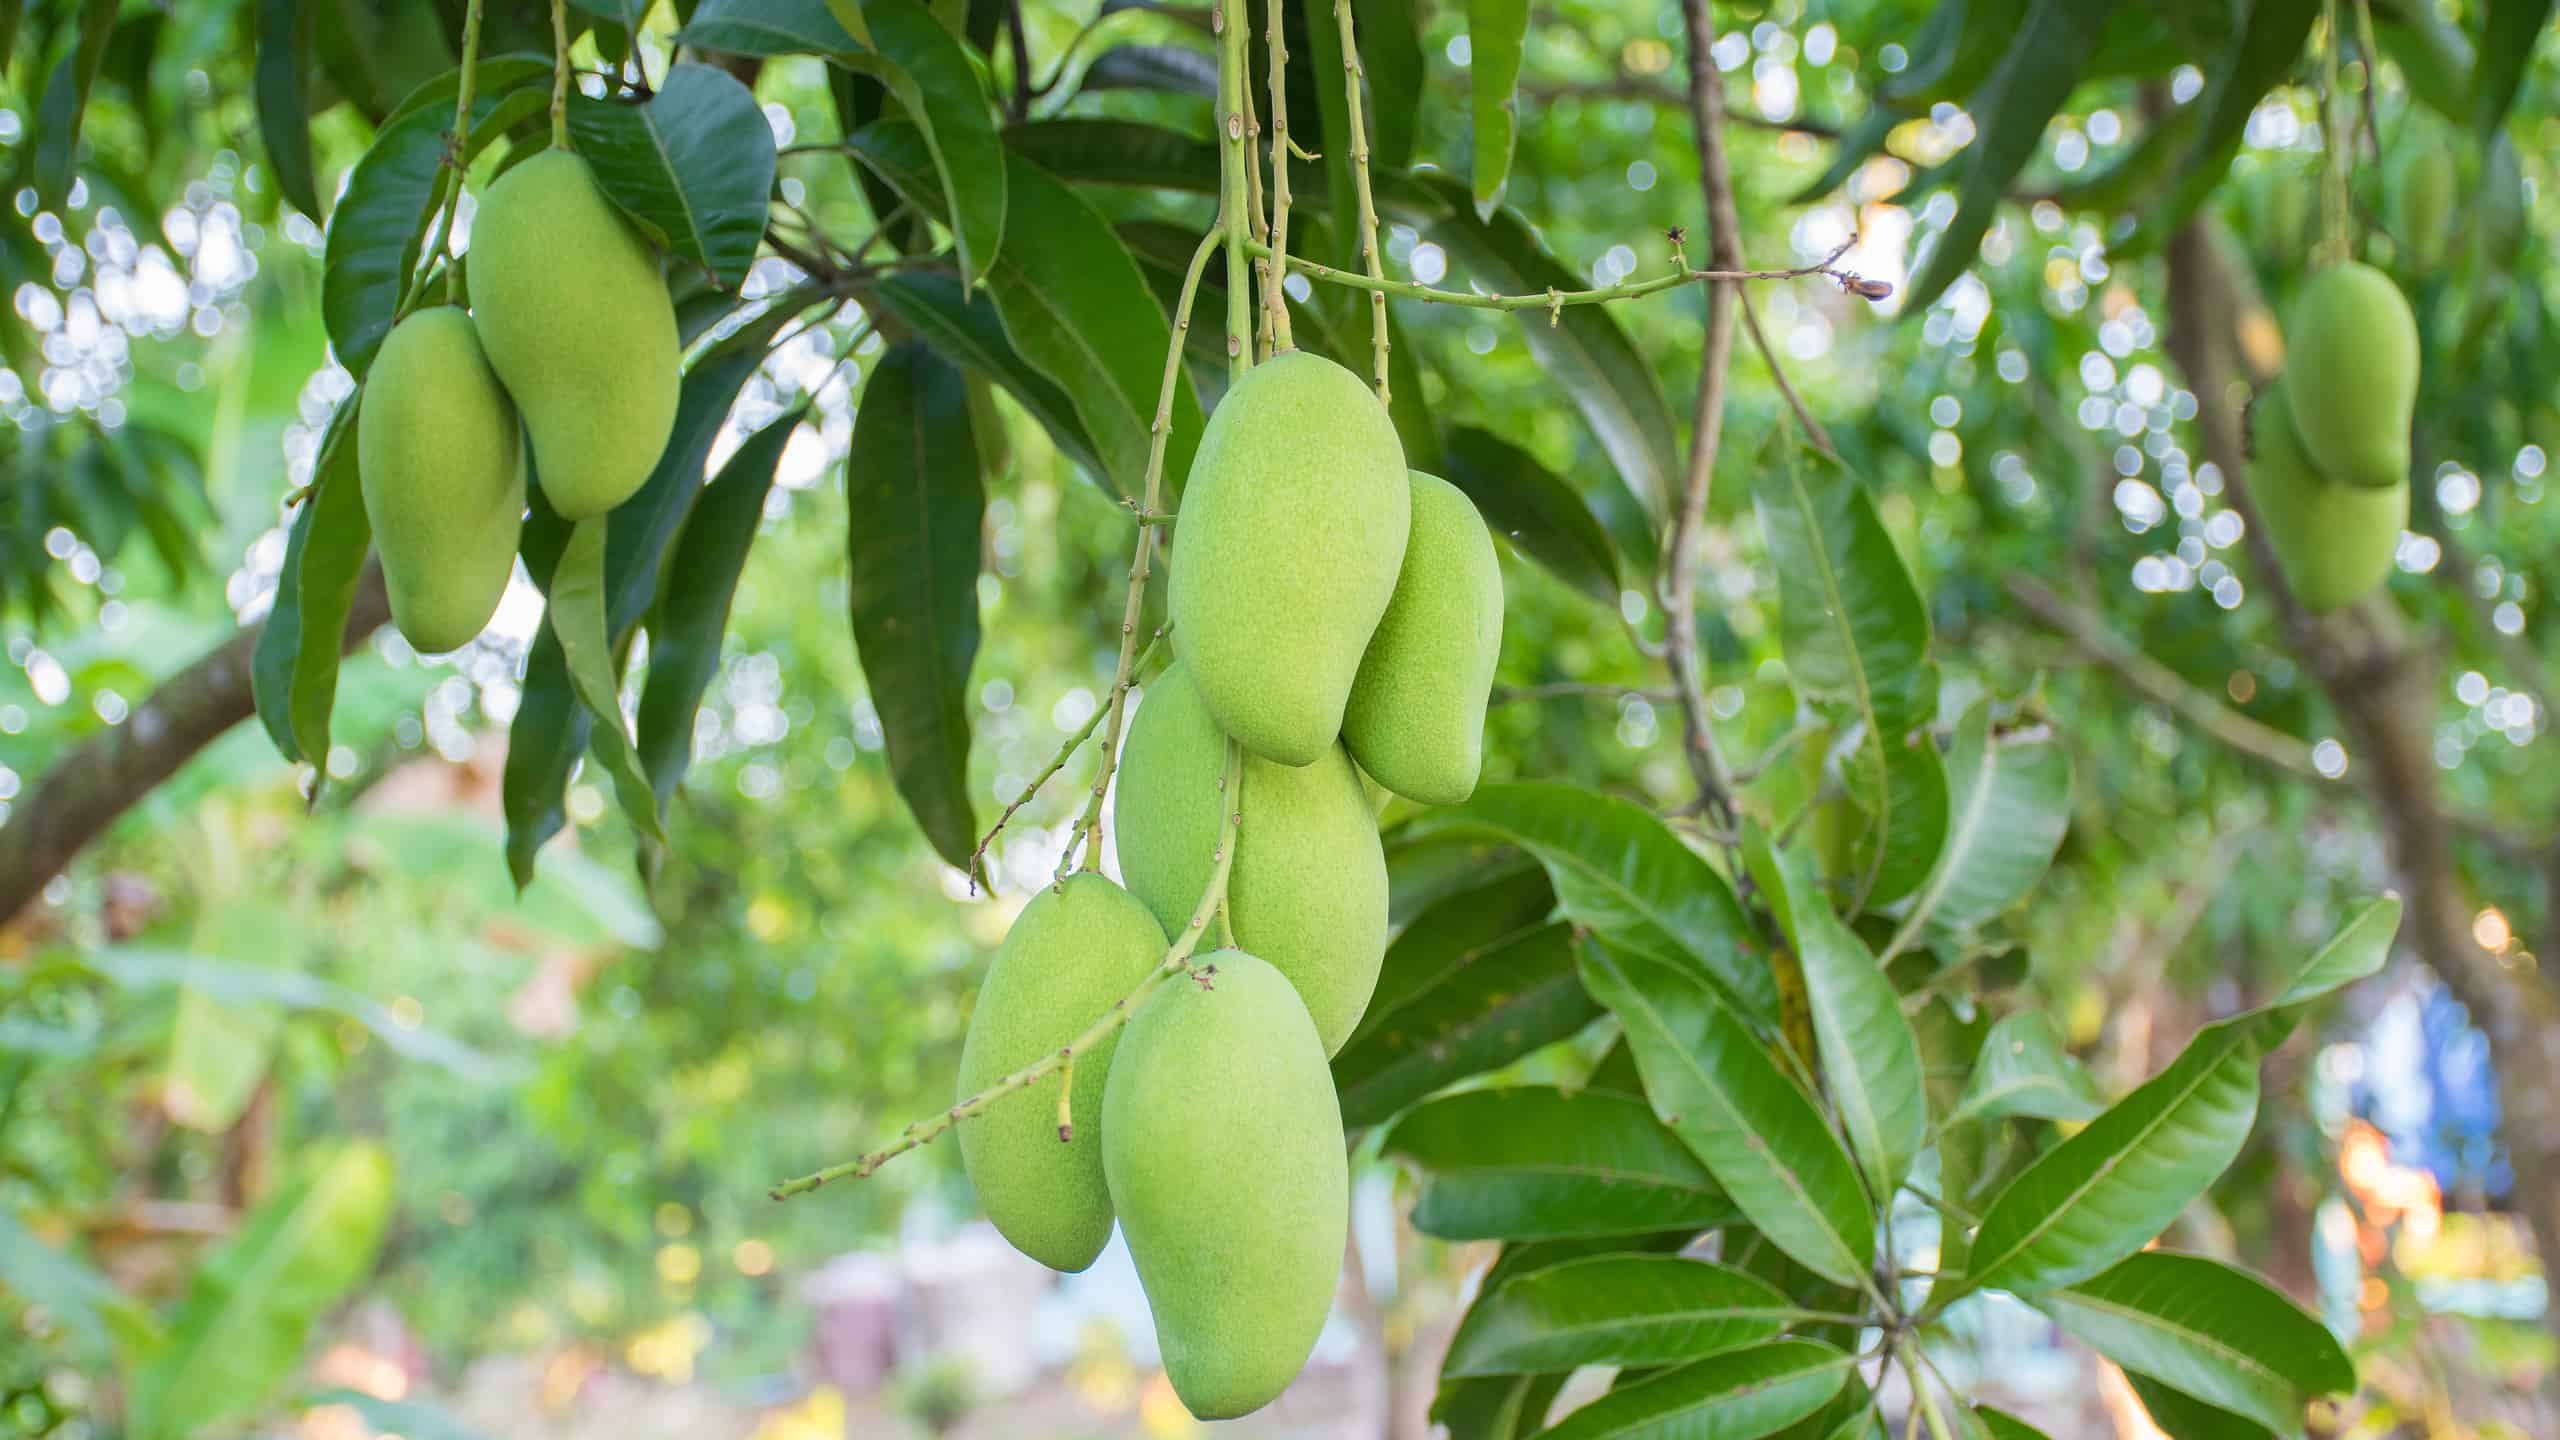 How to Grow Mango Trees